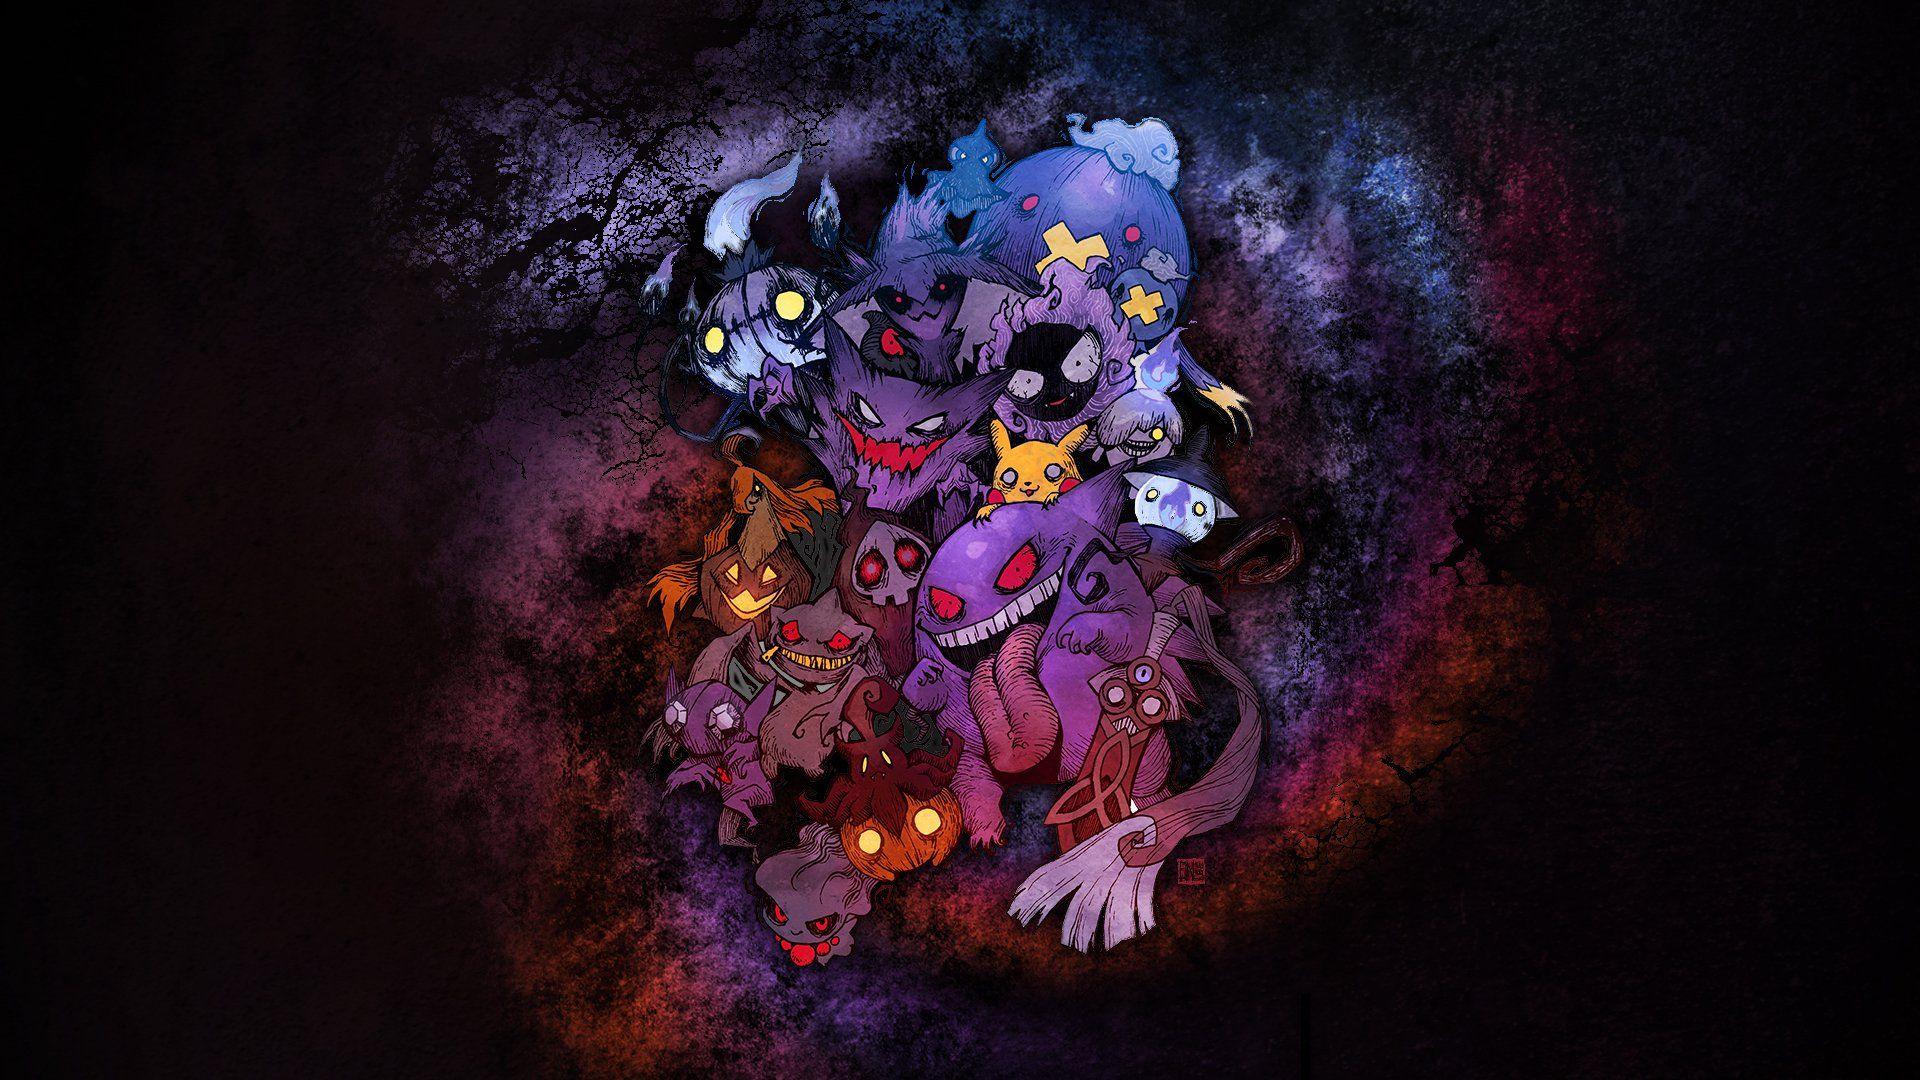 Misdreavus (Pokémon) HD Wallpaper and Background Image